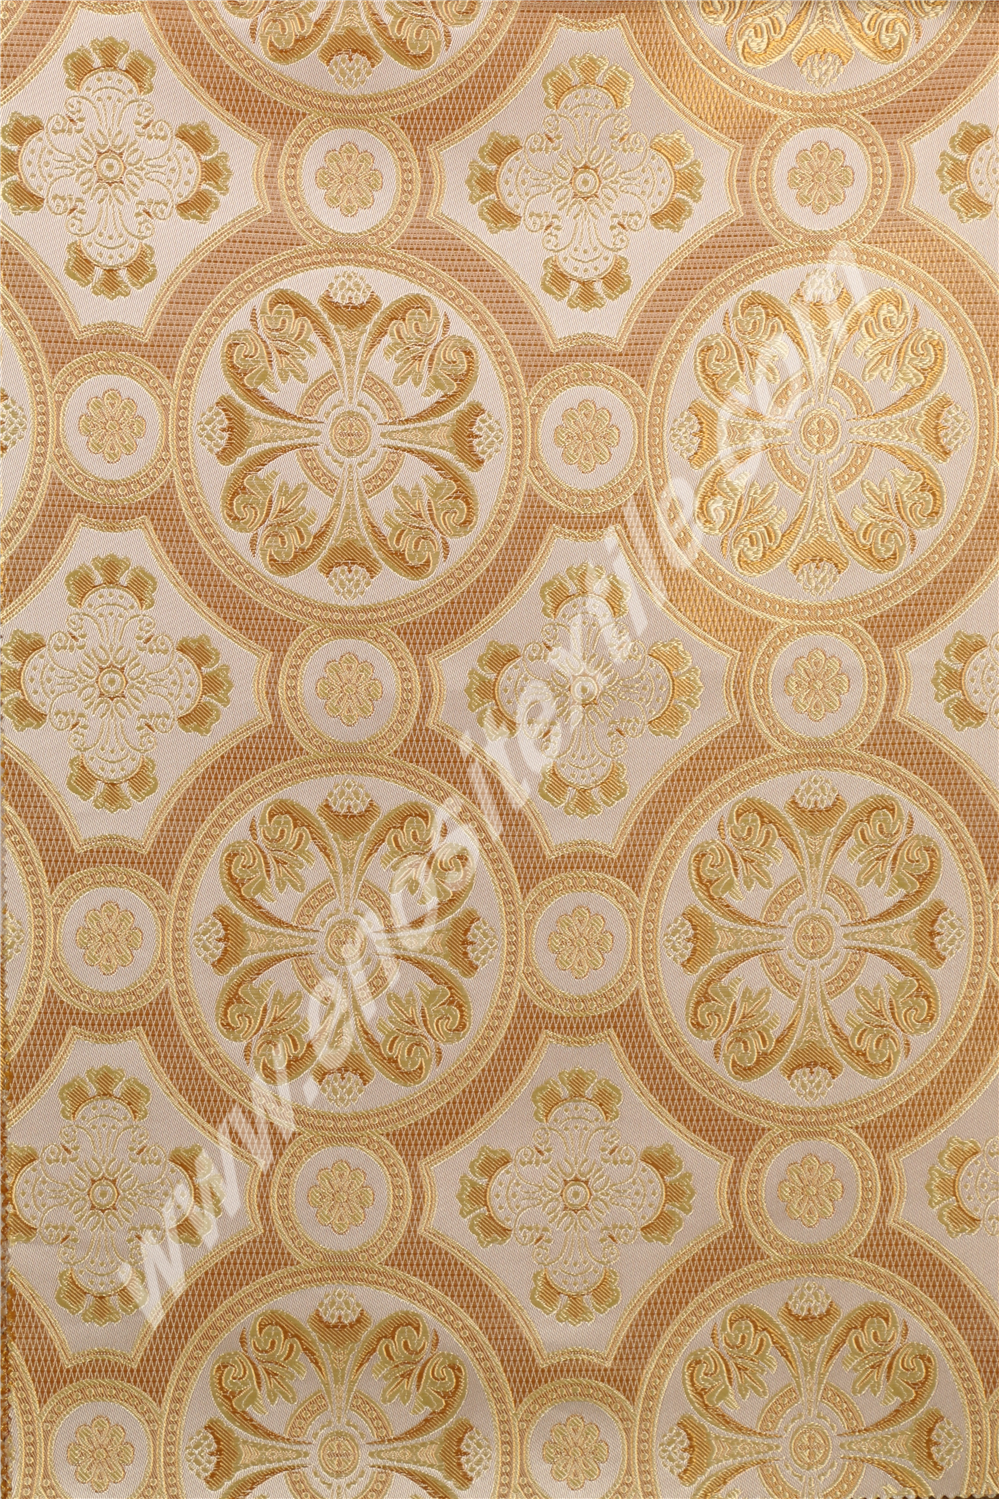 KL-027 White-Light Gold Brocade Fabrics